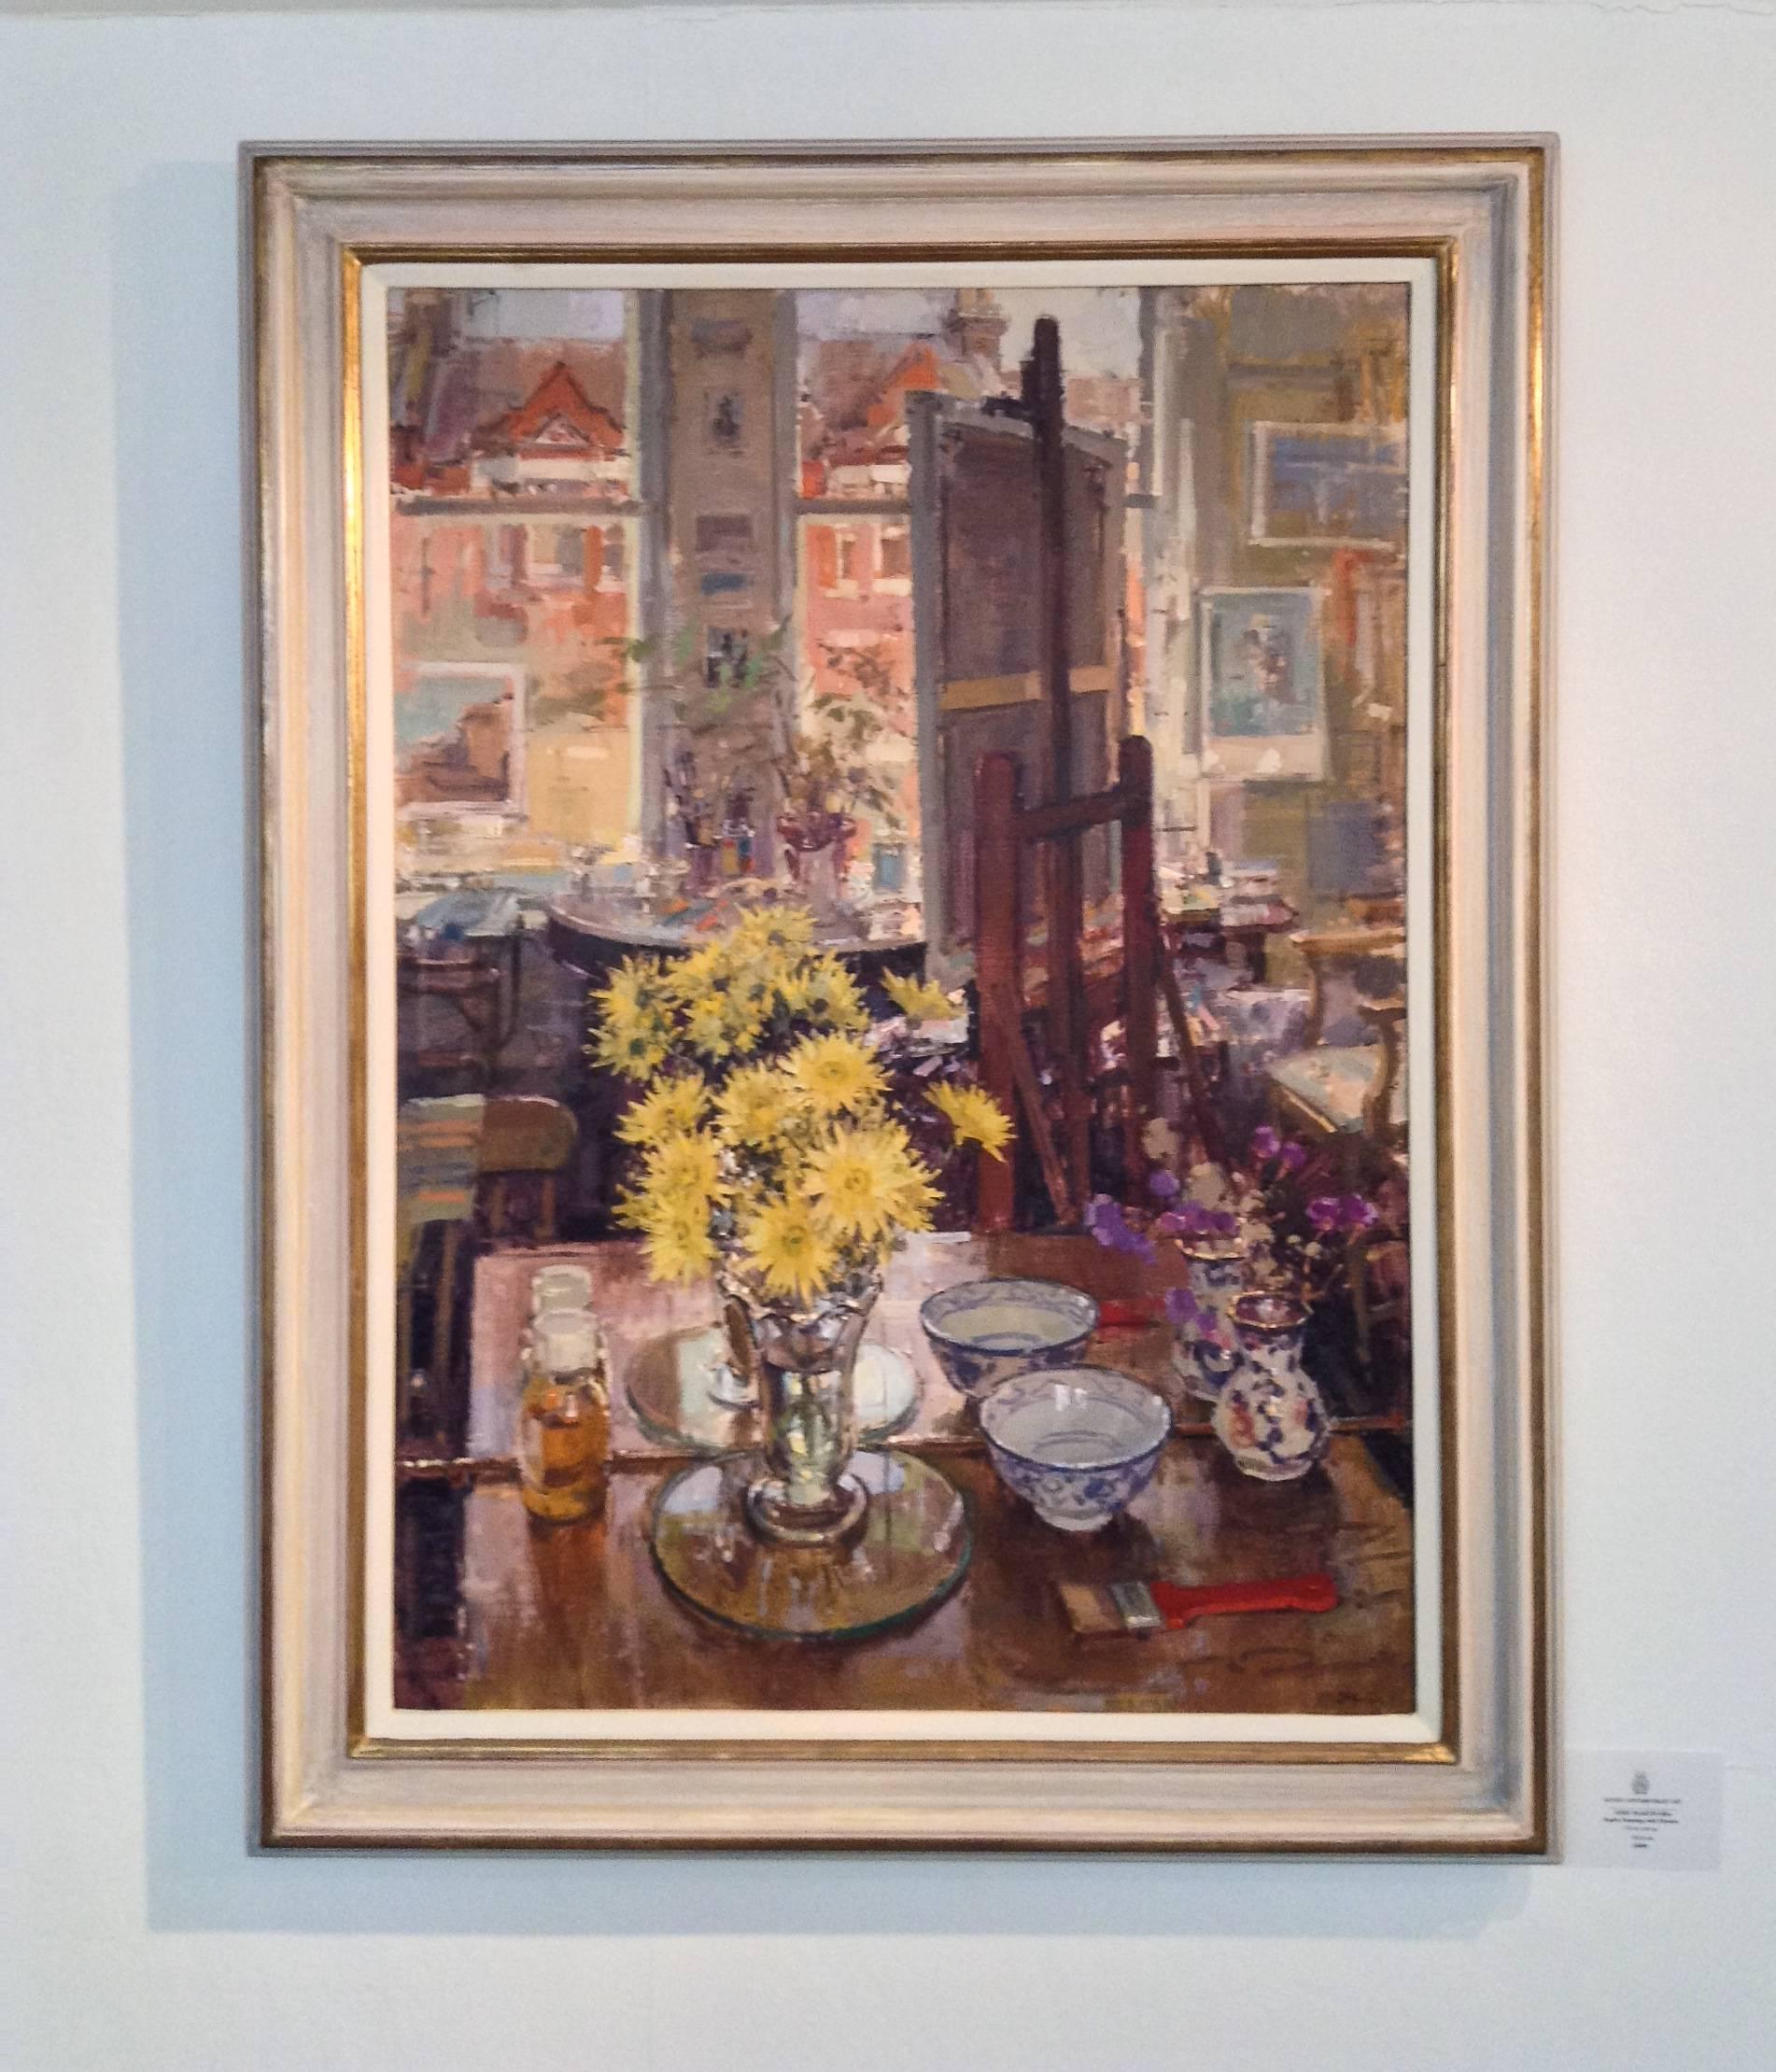 Studio-Gemälde mit Blumen - Original-Ölgemälde, modernes impressionistisches Original-Ölgemälde aus Impasto (Impressionismus), Painting, von John D Martin RBA